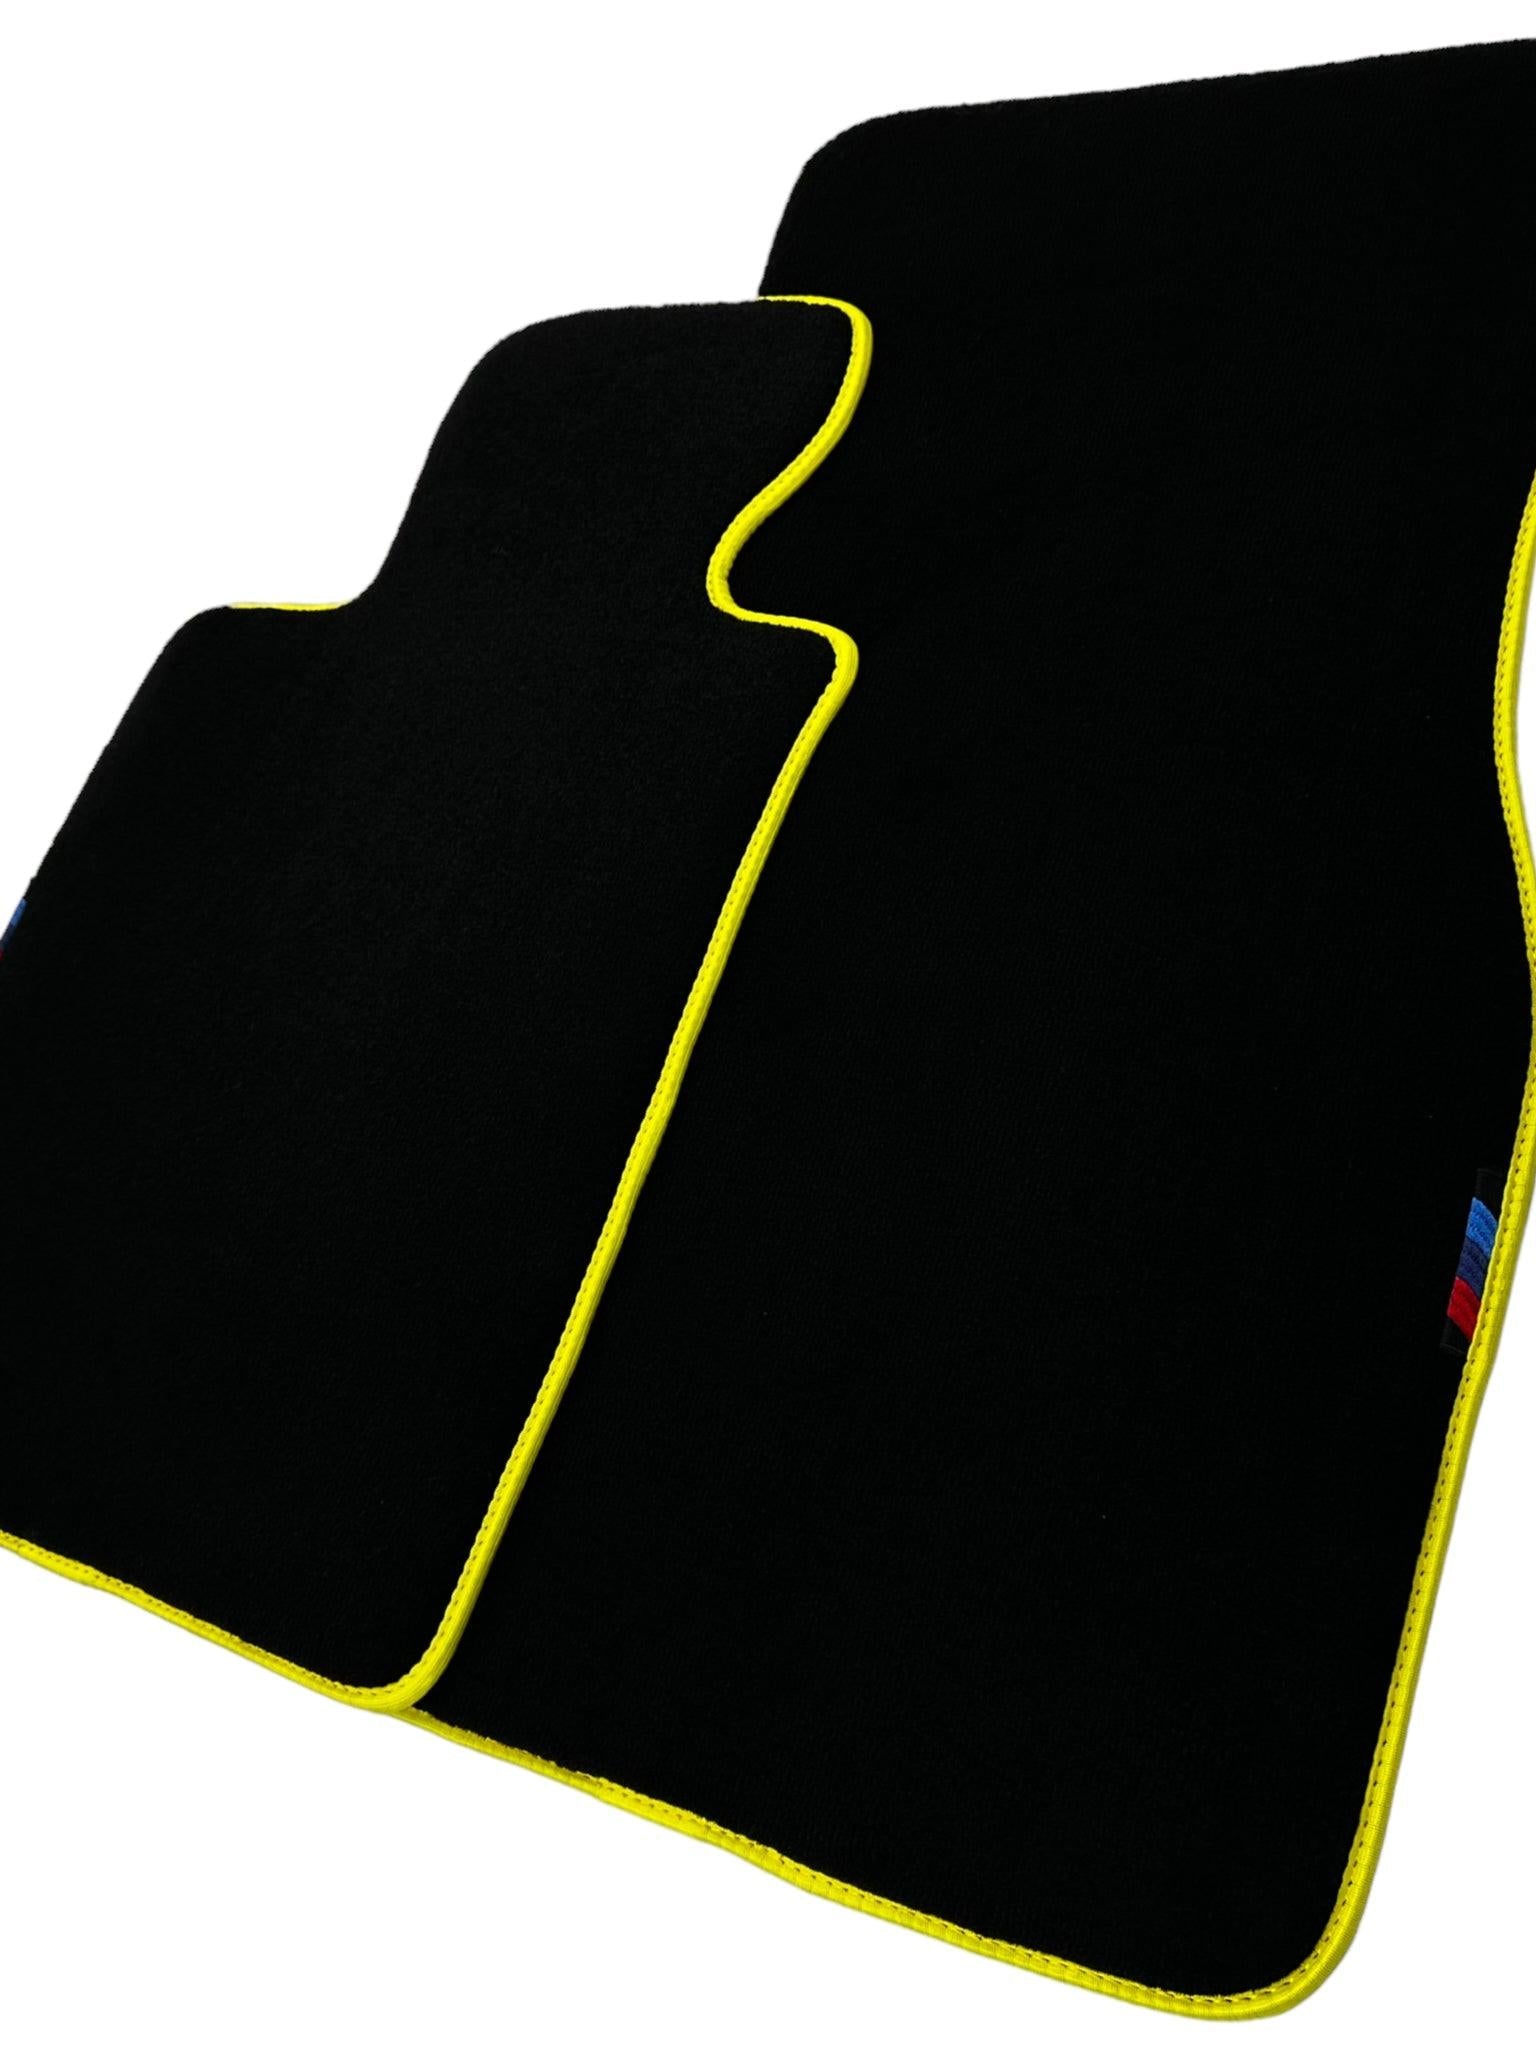 Black Floor Floor Mats For BMW 1 Series F40 | Fighter Jet Edition Autowin Brand | Yellow Trim